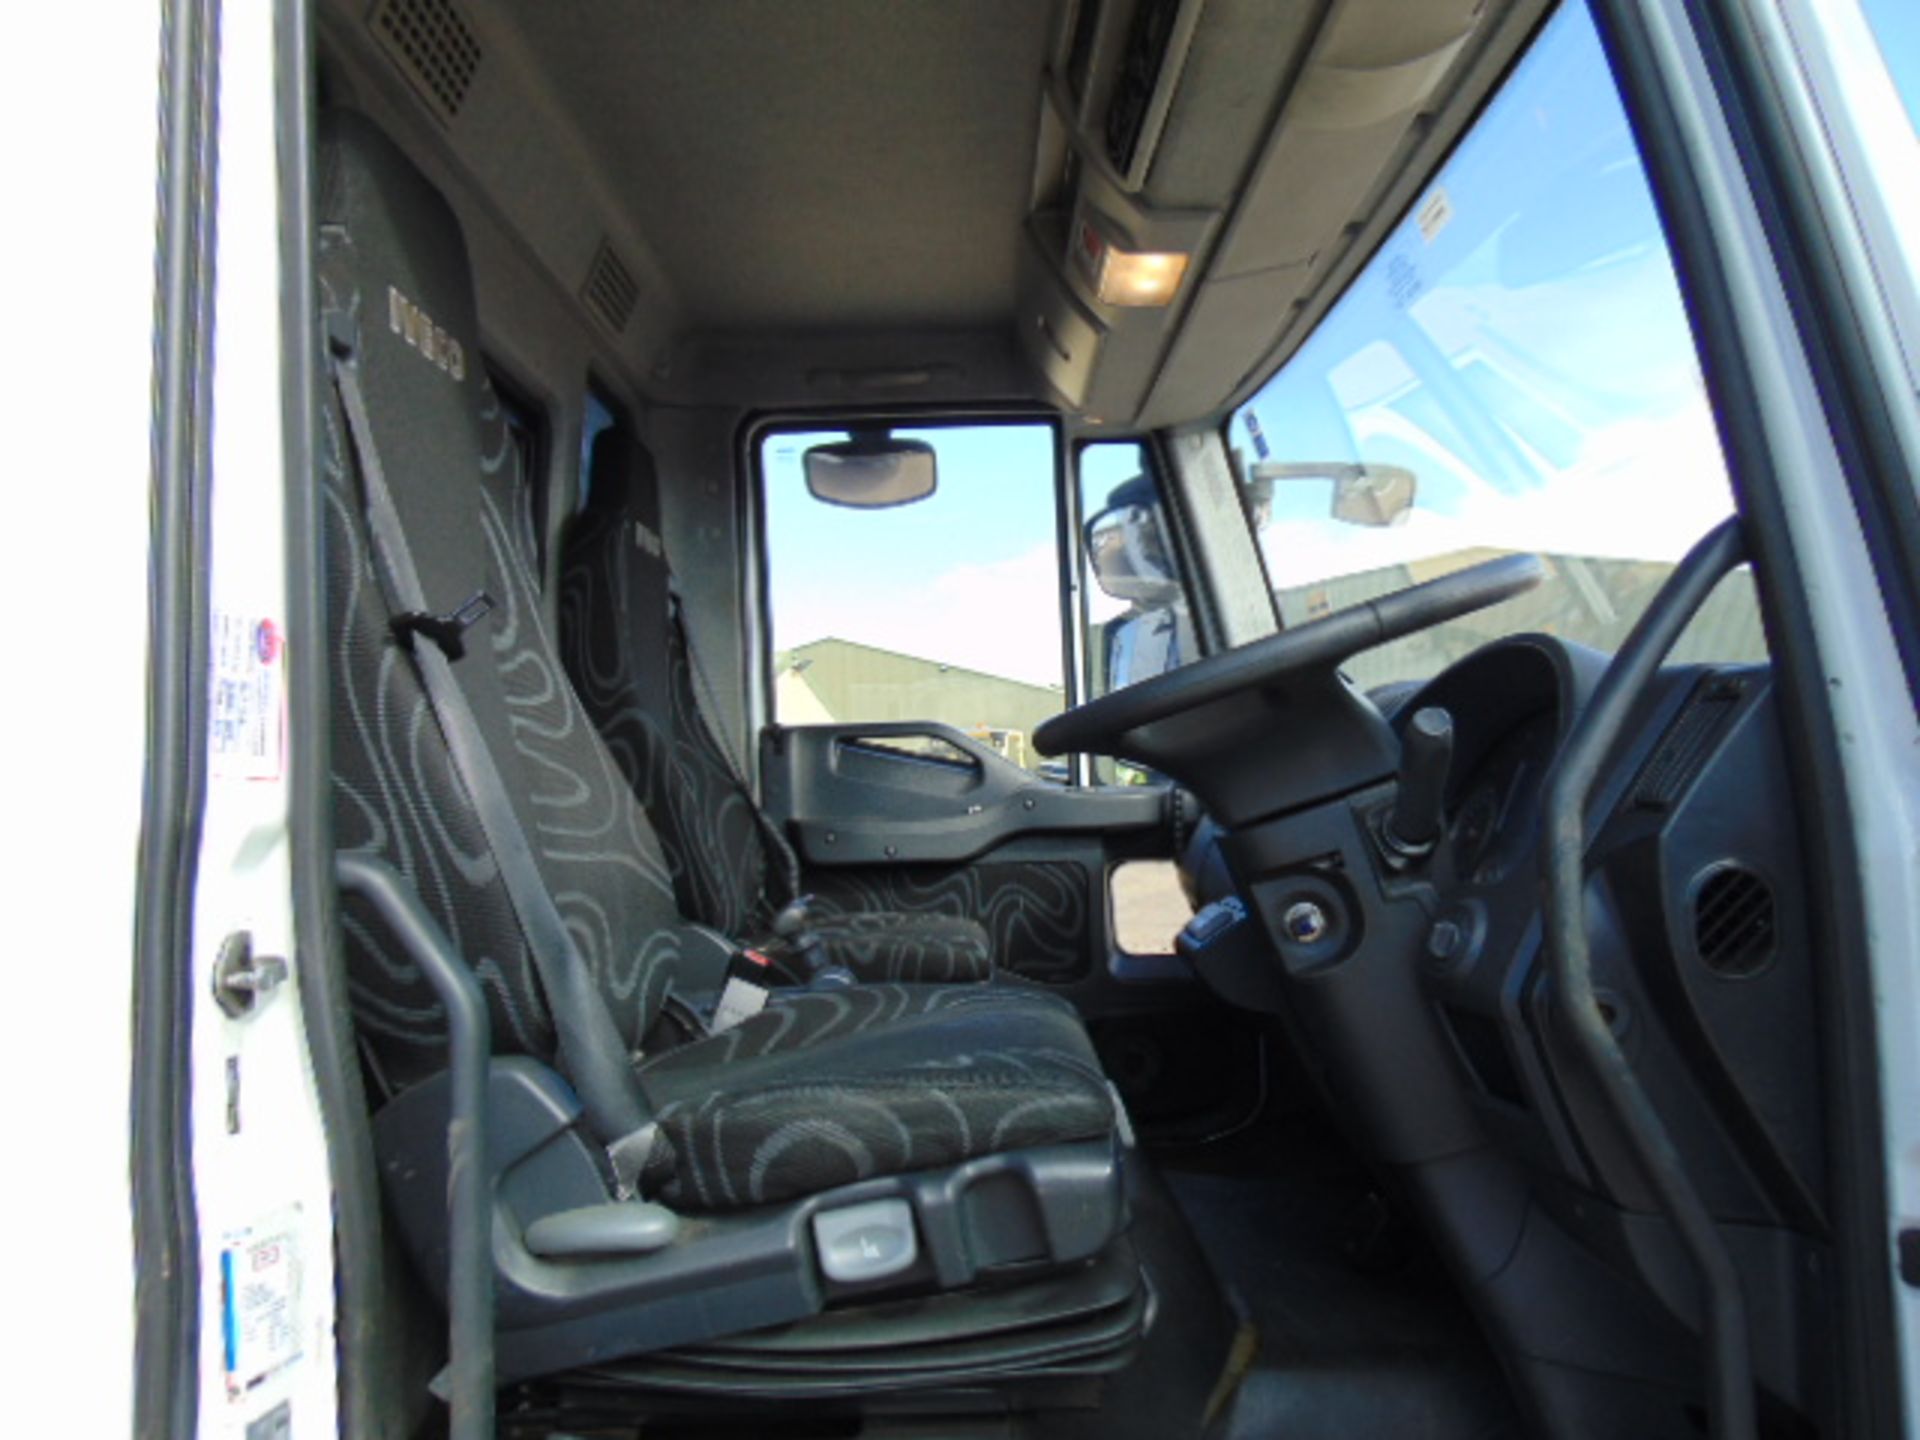 2011 Iveco Eurocargo 100E18 Day Cab Box Van 4x2 3.9L Diesel - Prison/Secure Transport Vehicle - Image 20 of 26